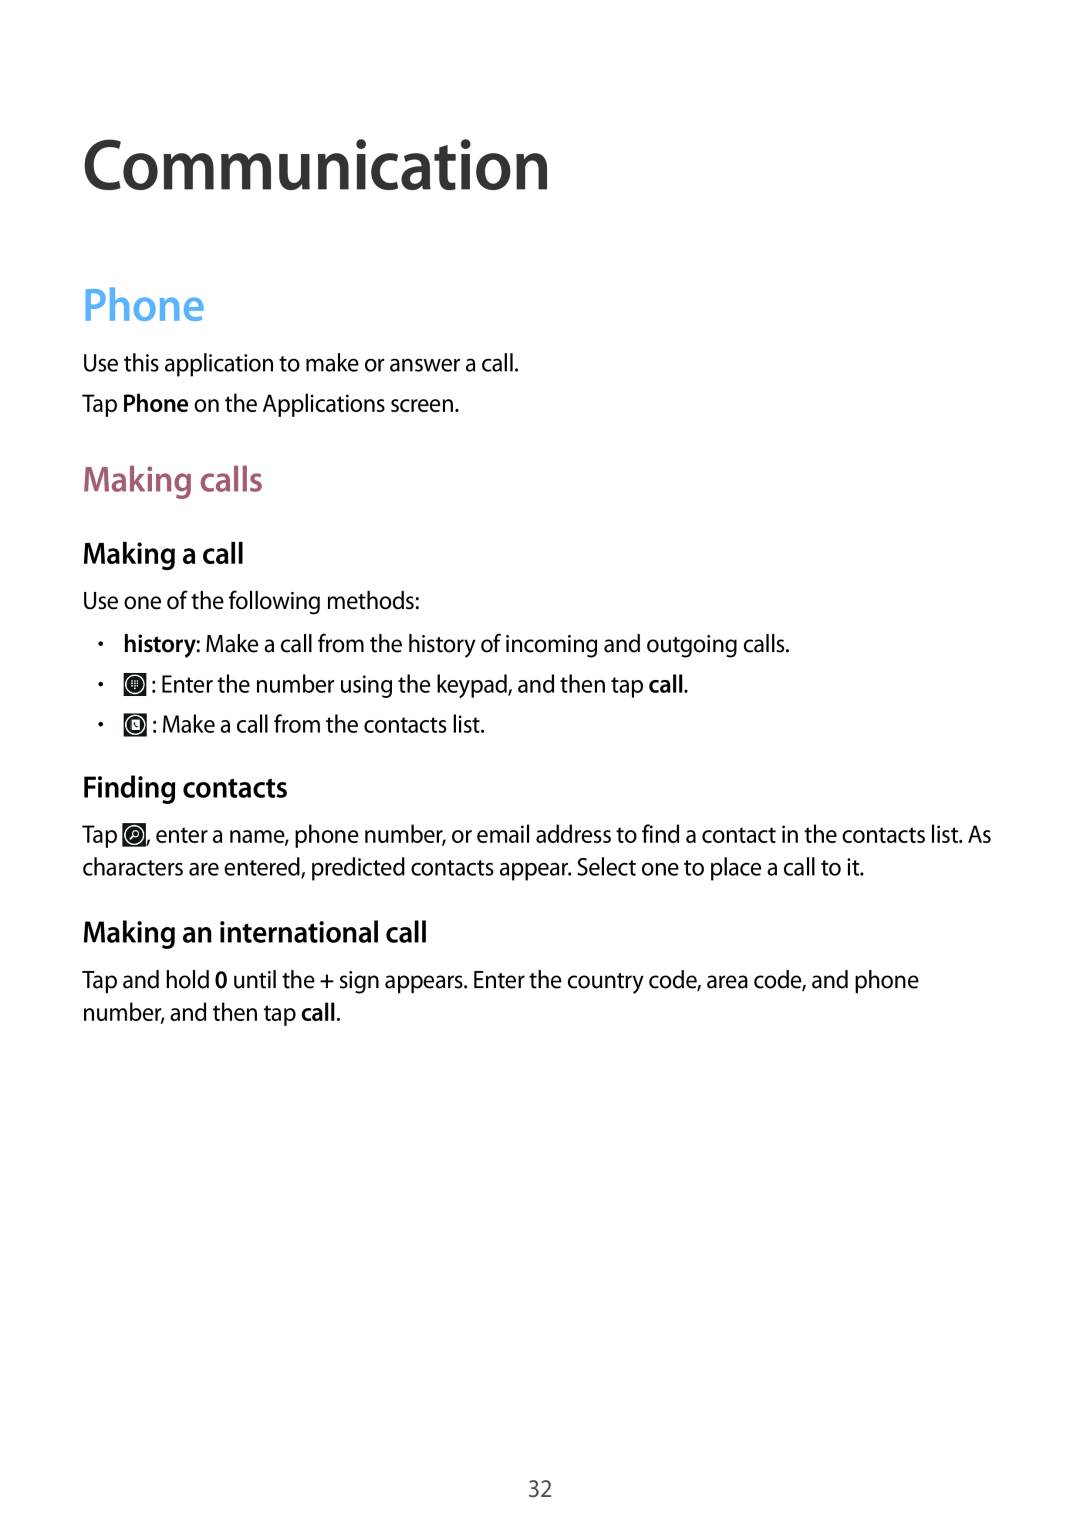 Samsung GT-I8750ALAORX Communication, Phone, Making calls, Making a call, Finding contacts, Making an international call 